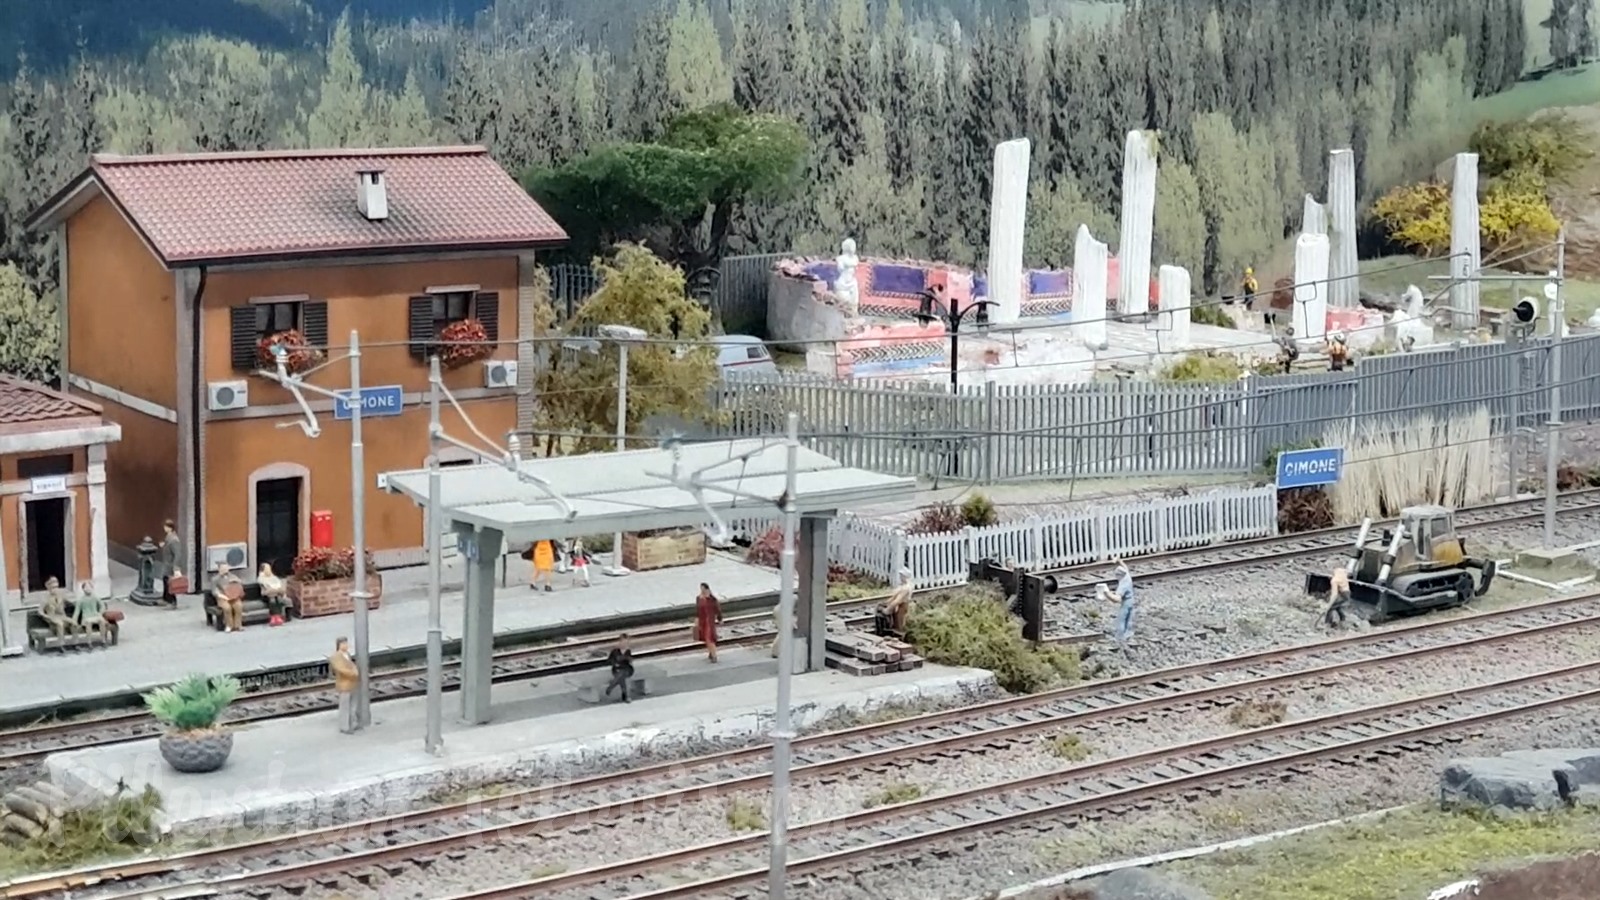 Treni in Transito: Modular Model Railway from Italy (Gruppo Fermodellistico Tartaruga)